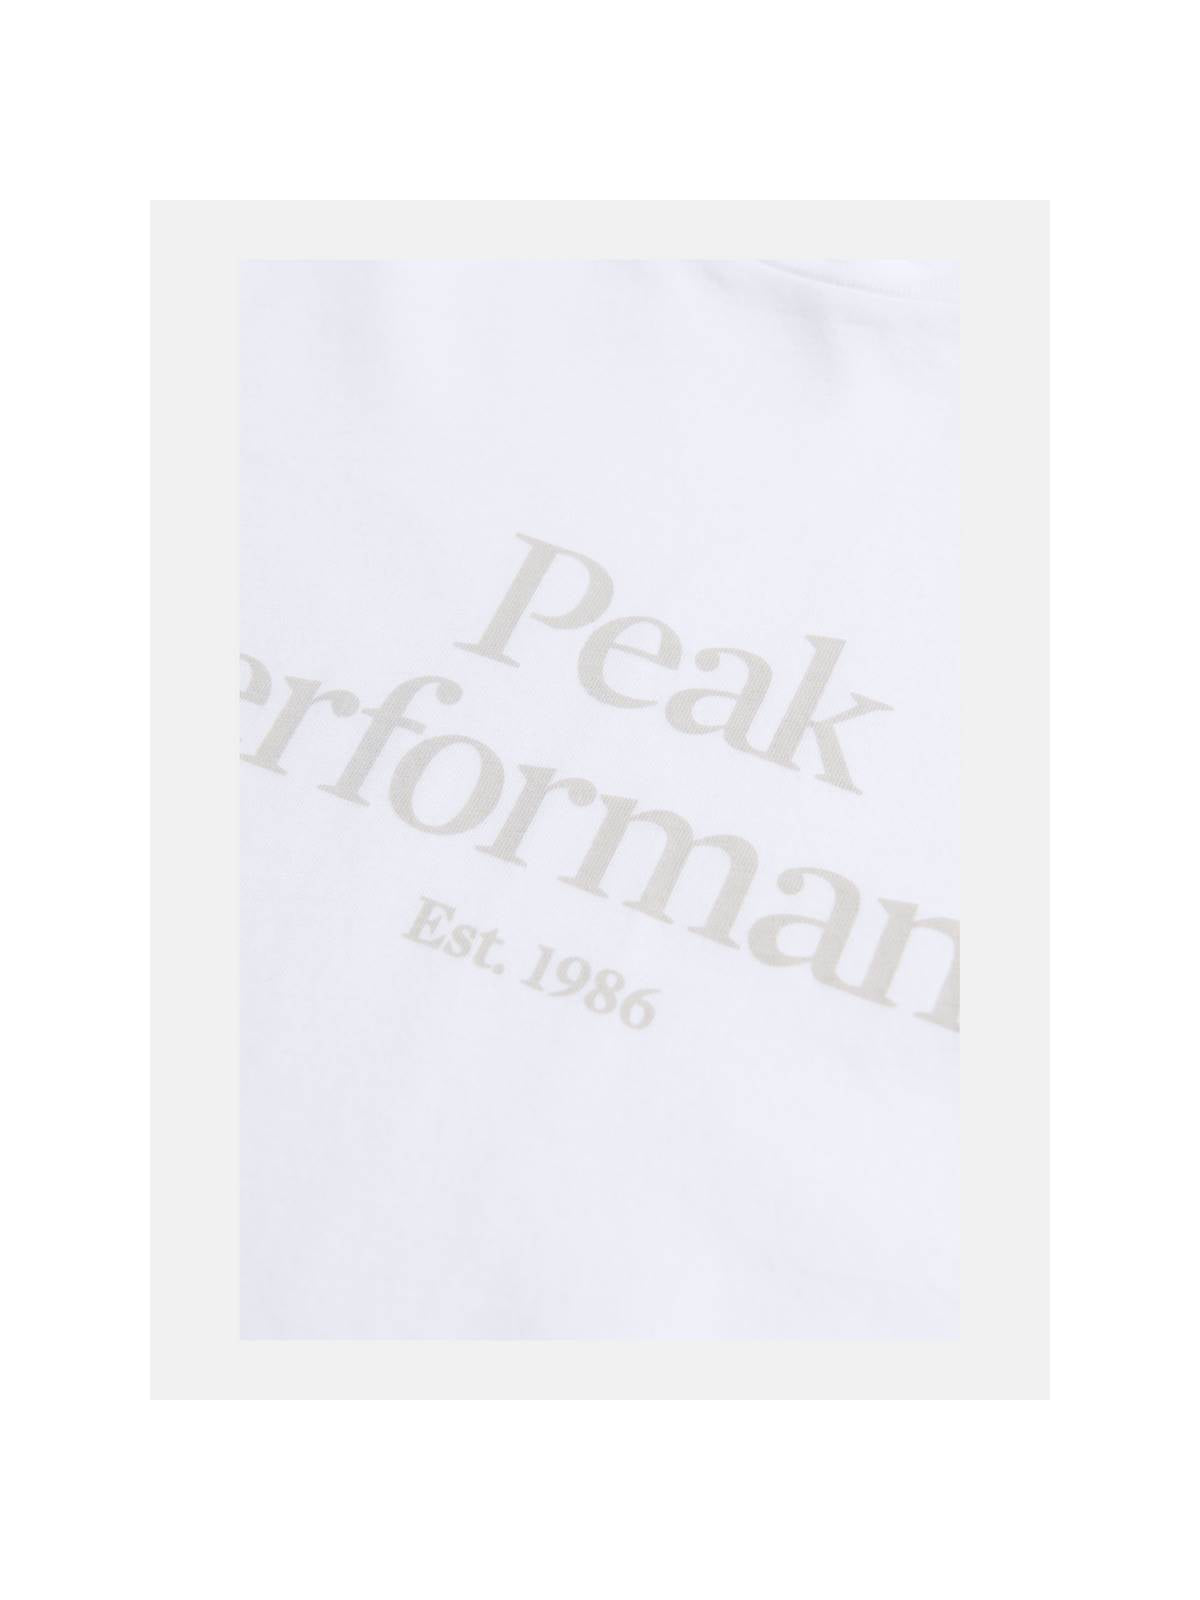 T-Shirt PEAK PERFORMANCE W ORIGINAL TEE